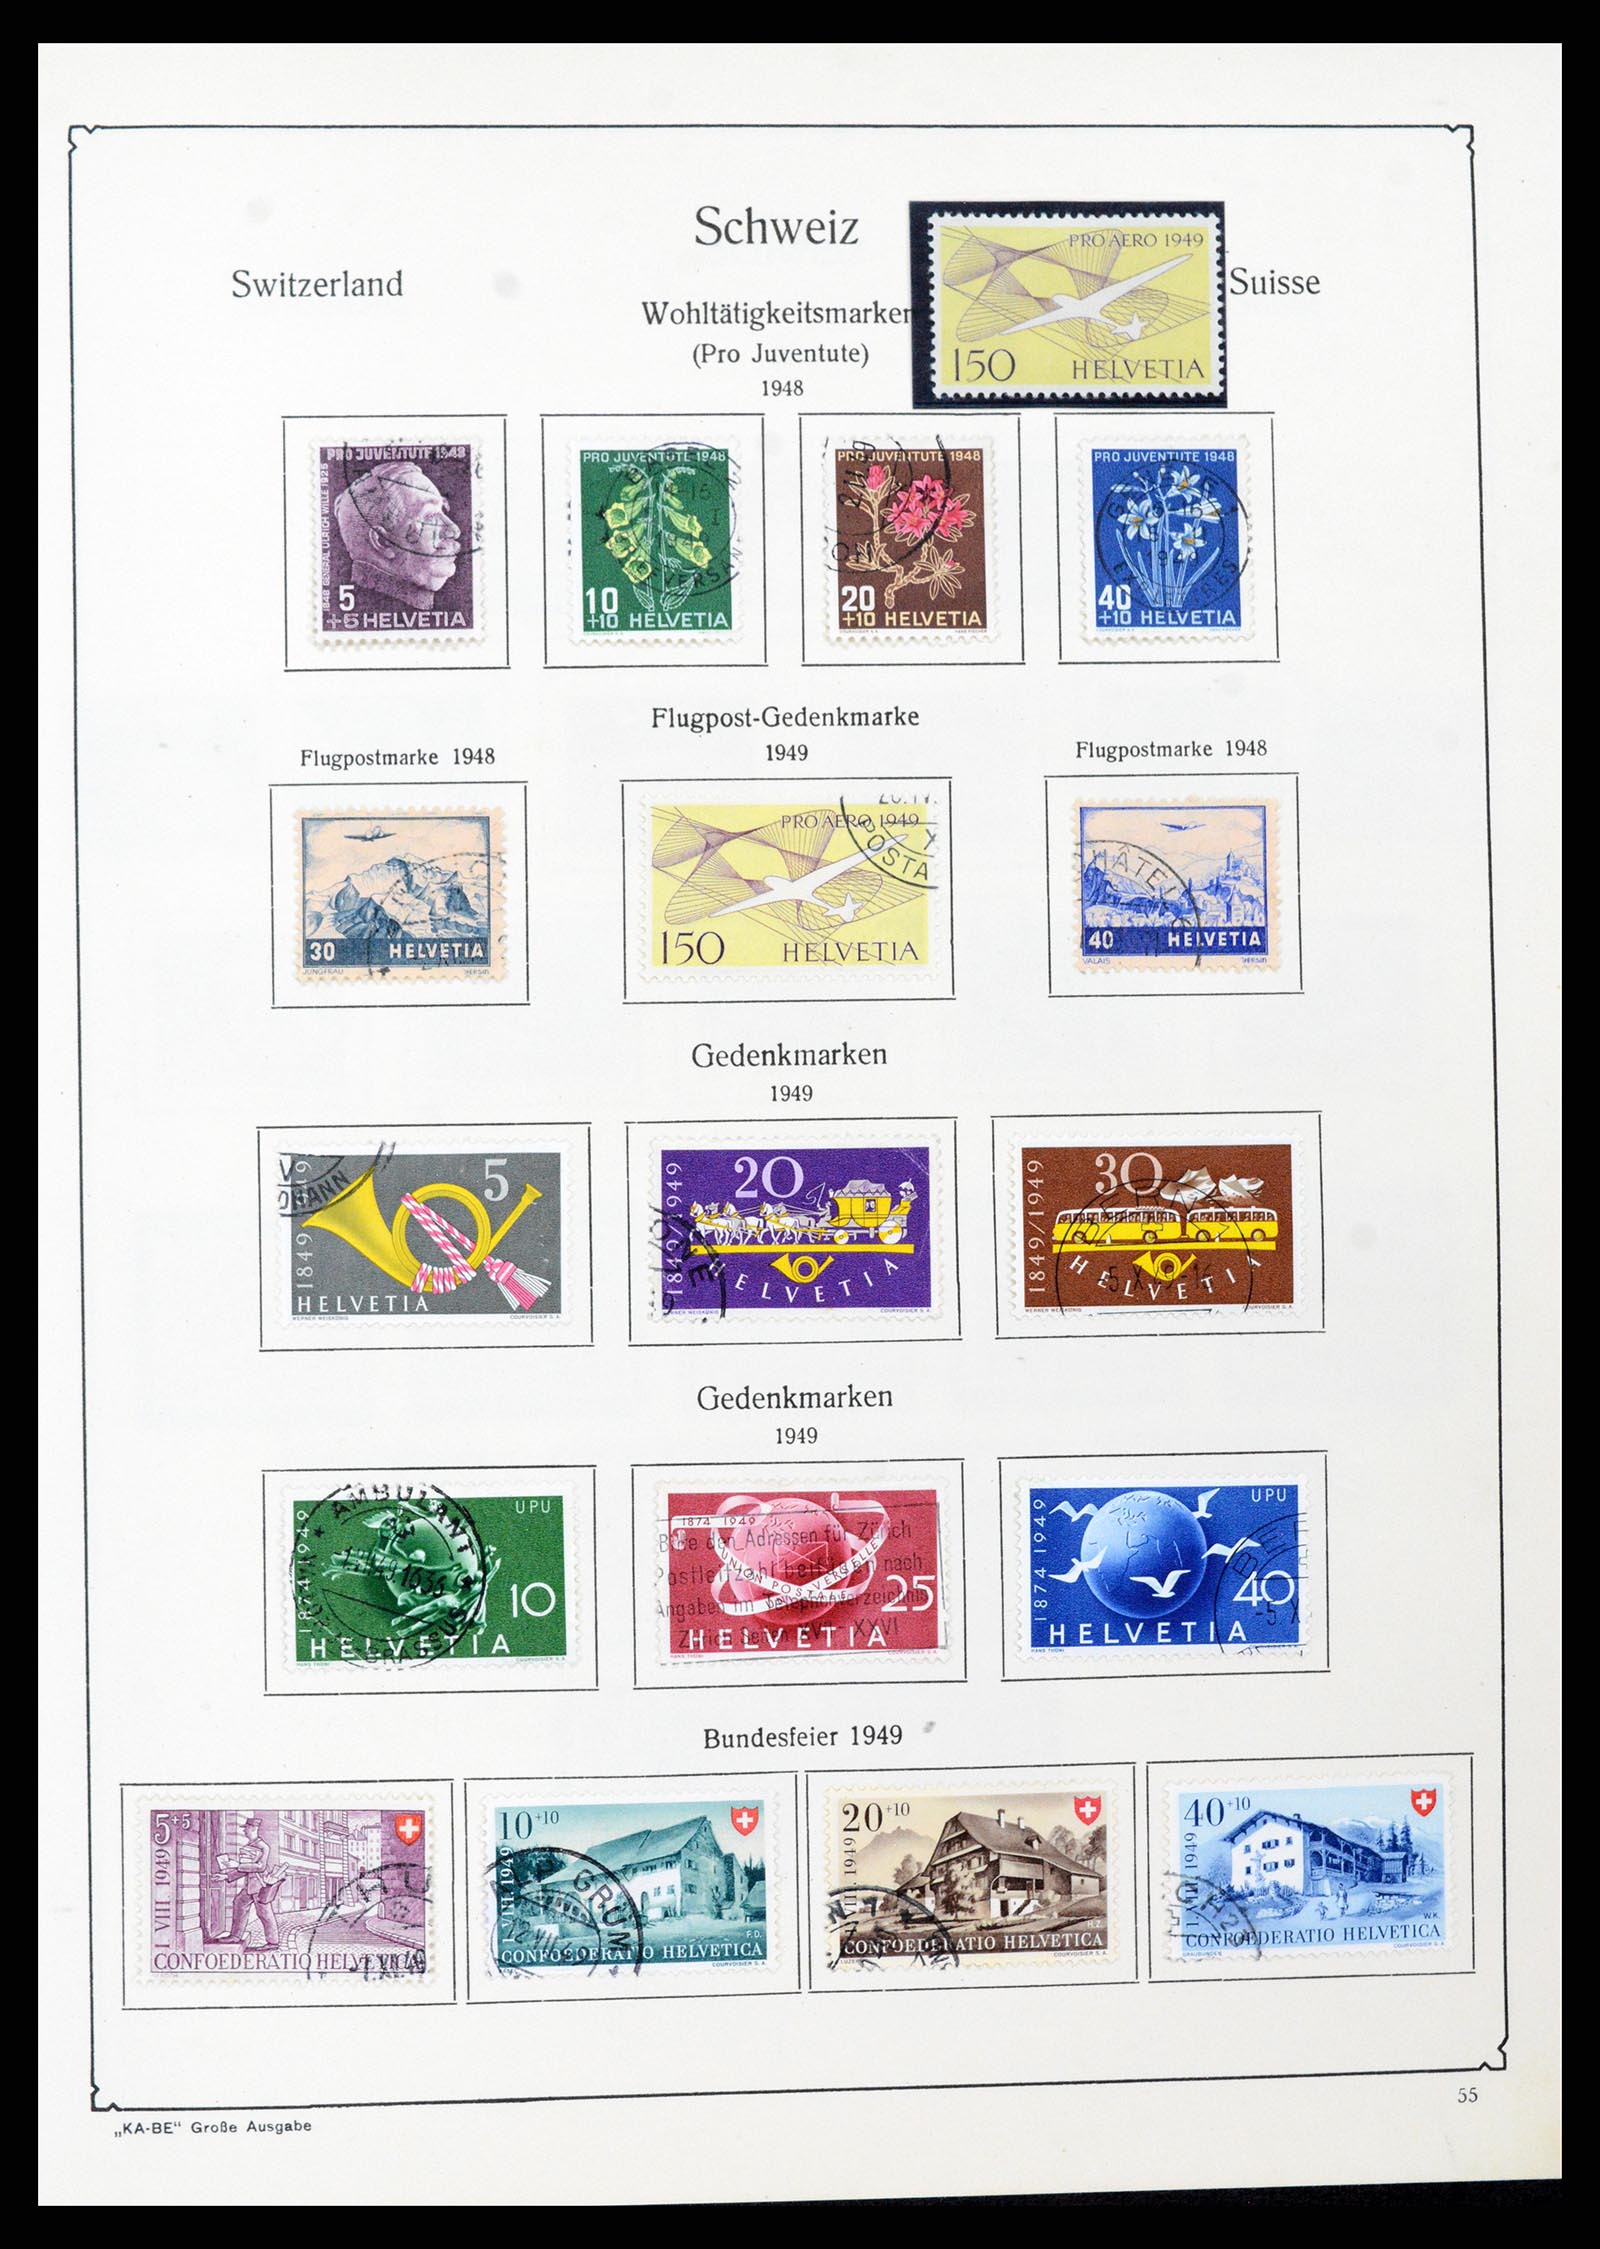 37588 052 - Stamp collection 37588 Switzerland 1854-1974.